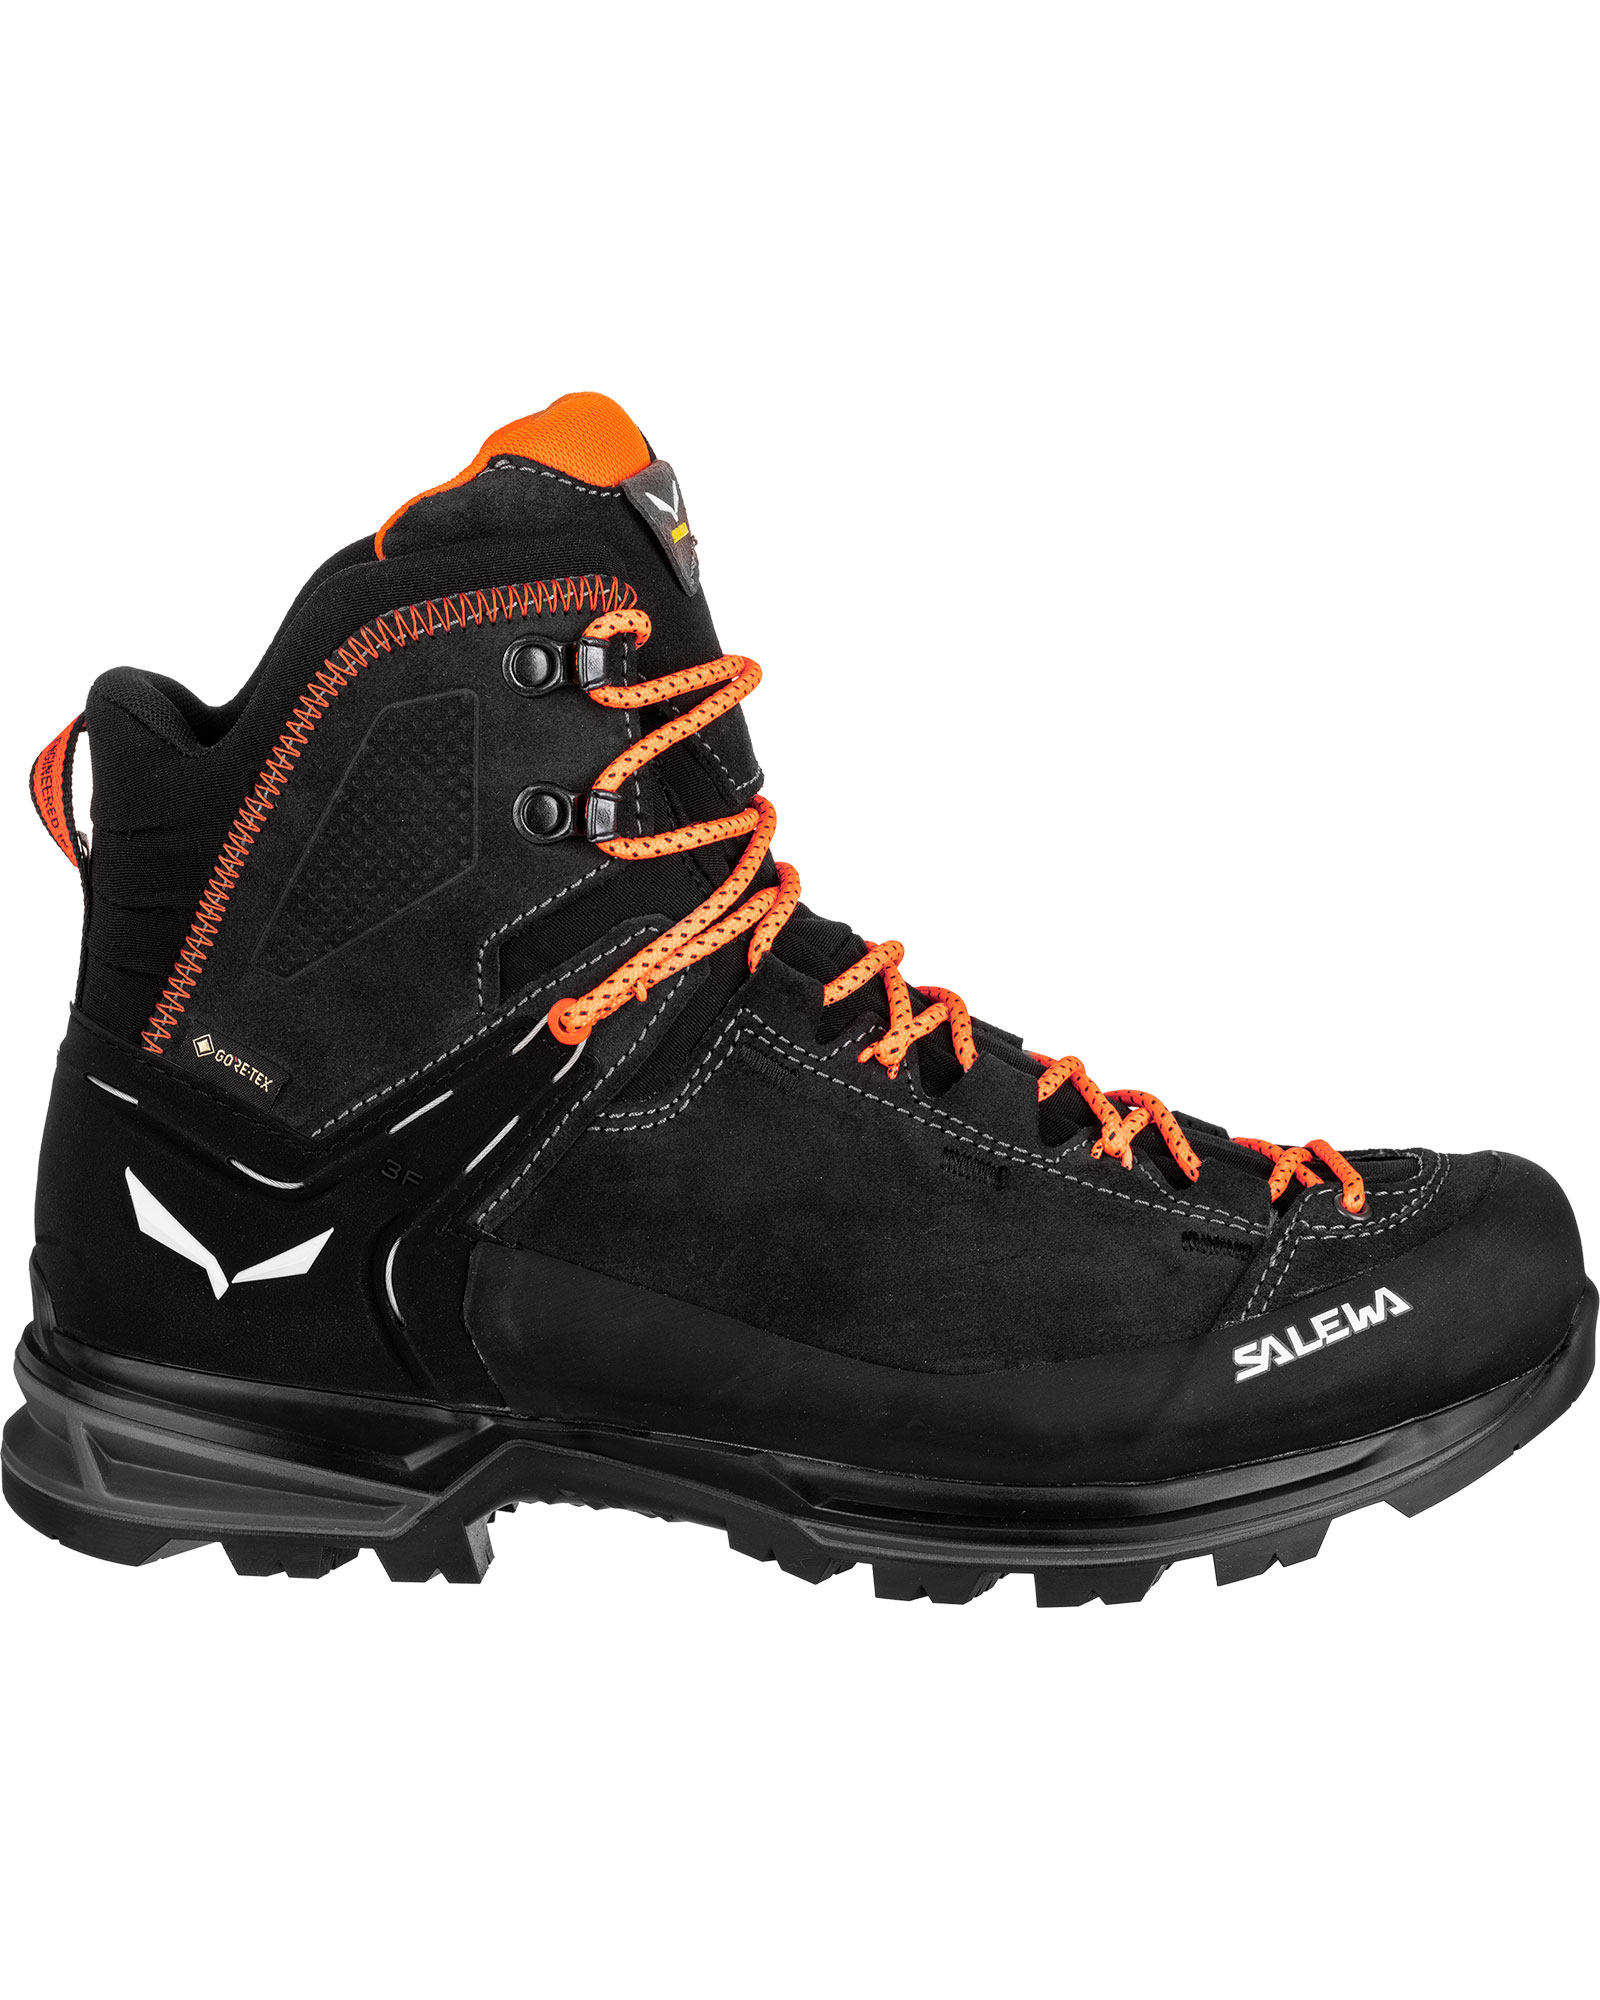 Salewa Mountain Trainer 2 Mid GORE TEX Men’s Boots - Onyx UK 11.5